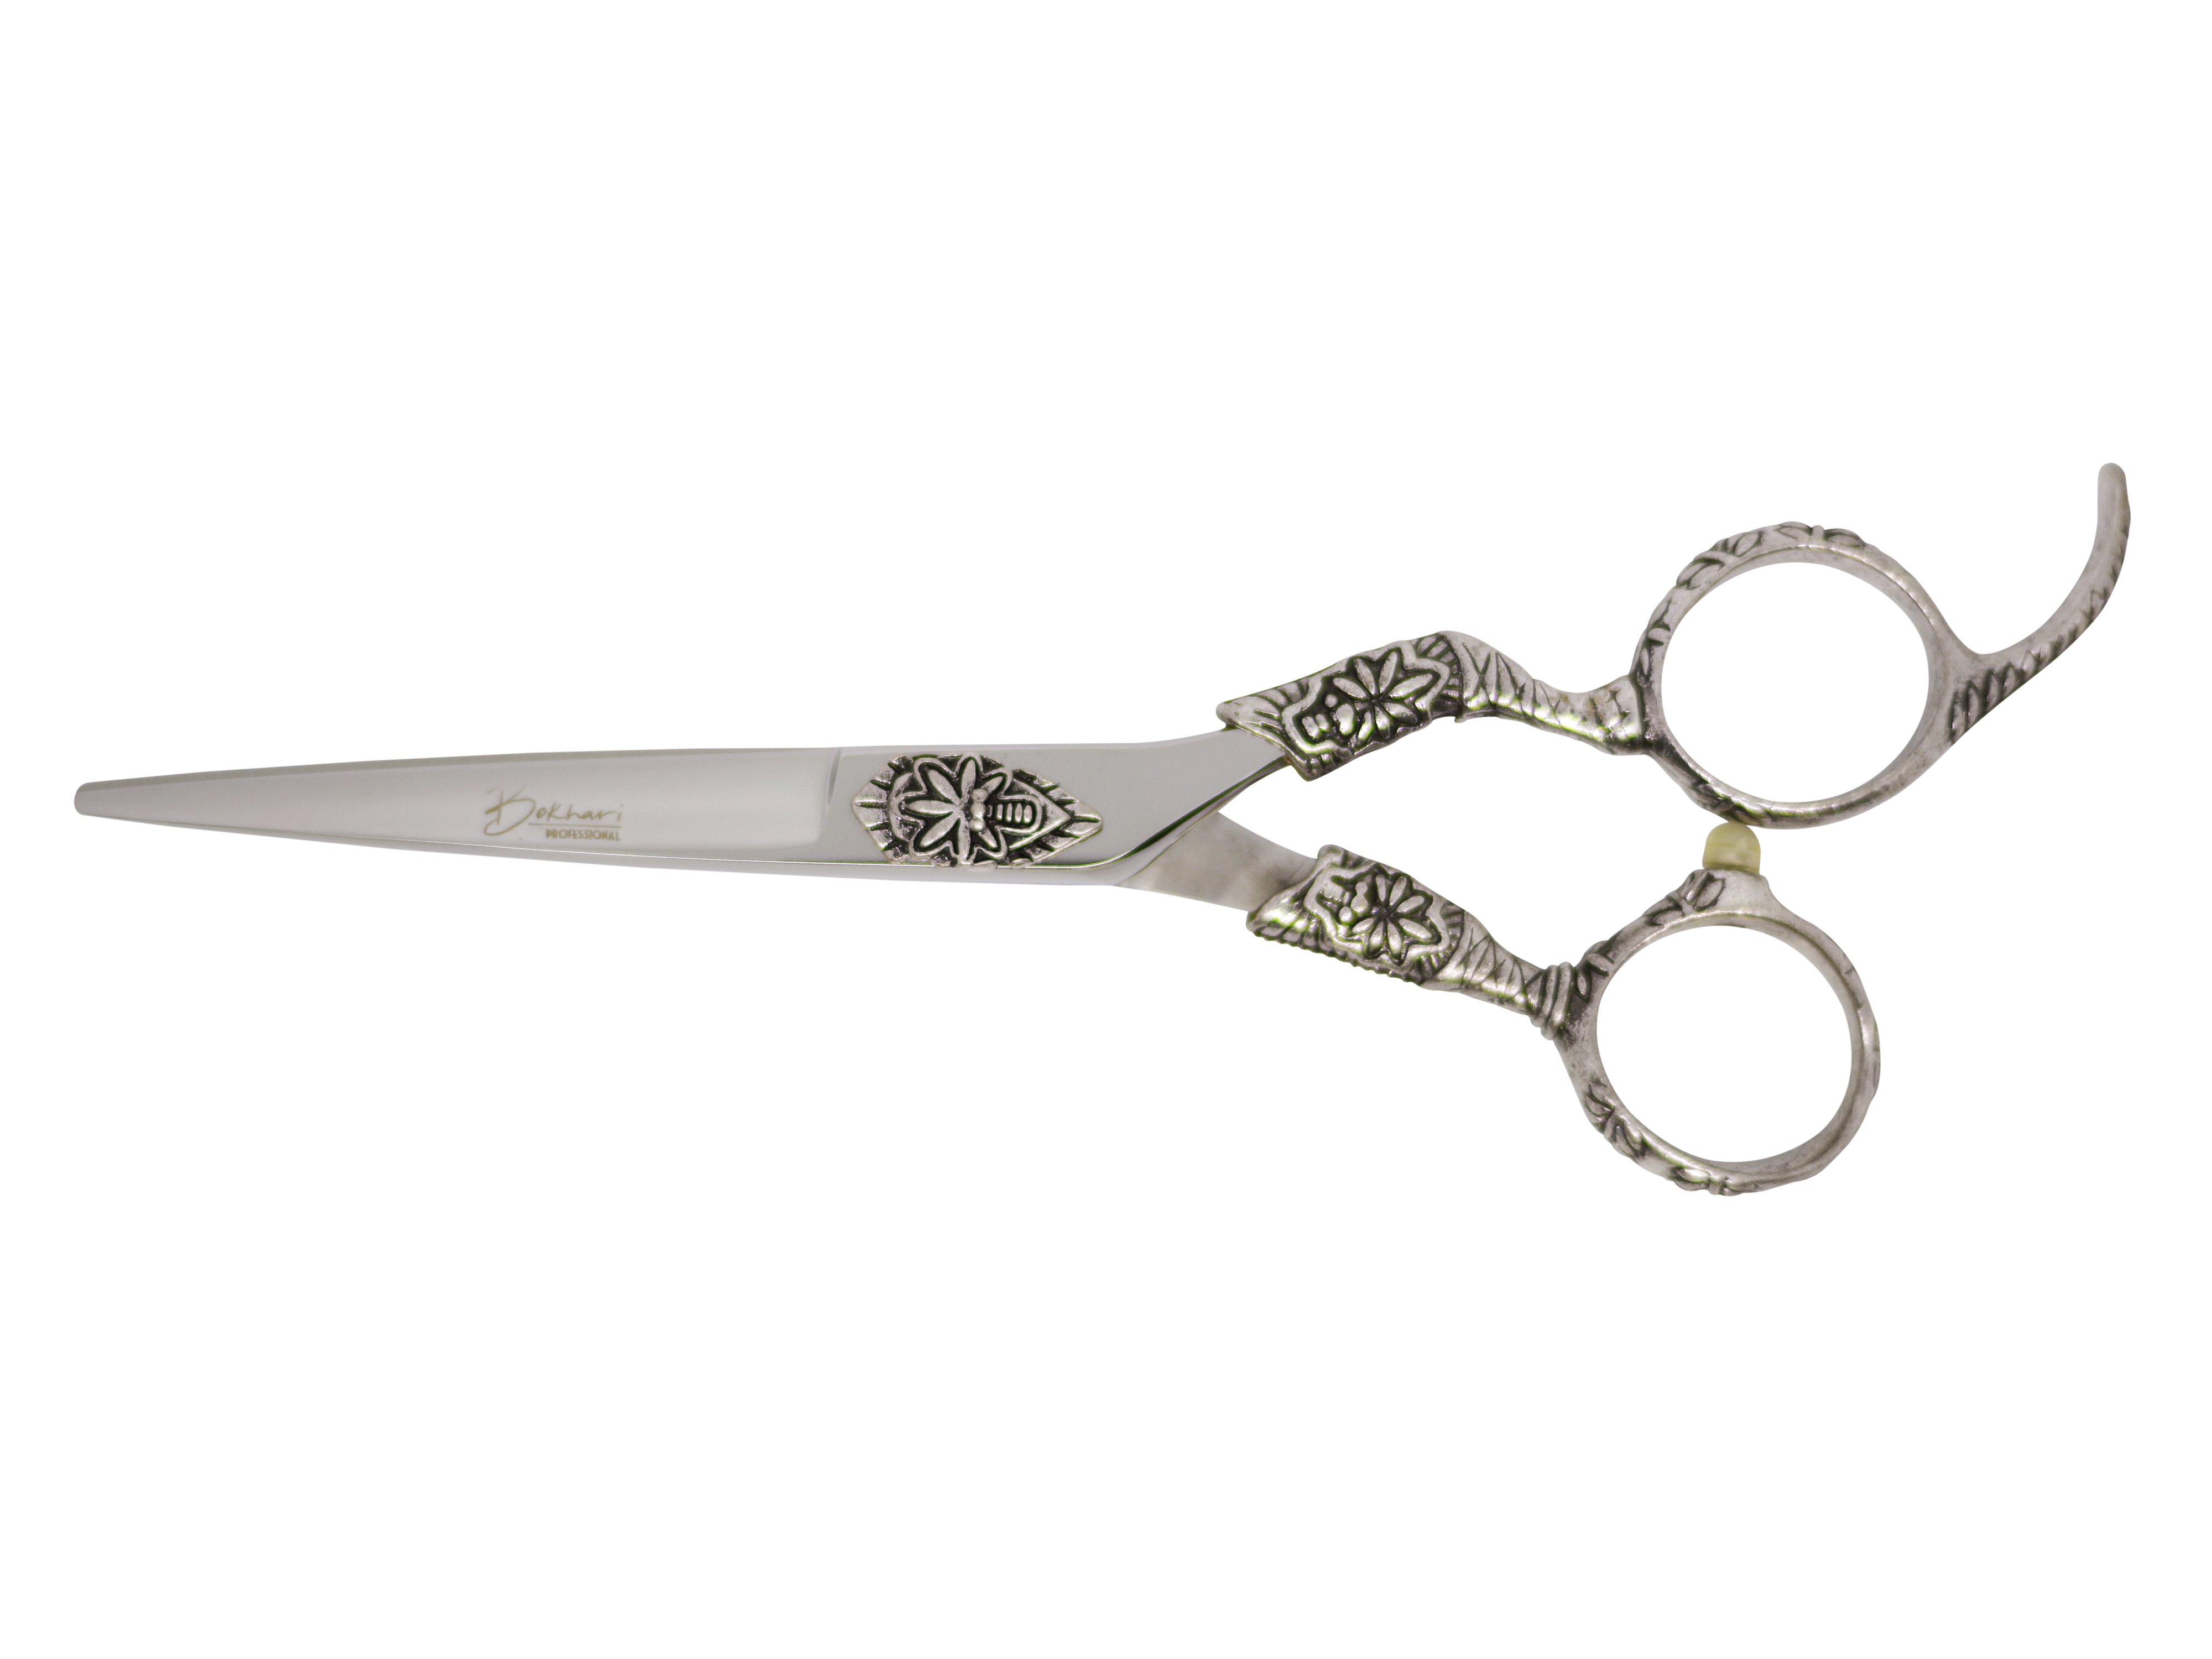 Bokhari Professional Hair Cutting Shears Scissors HW20